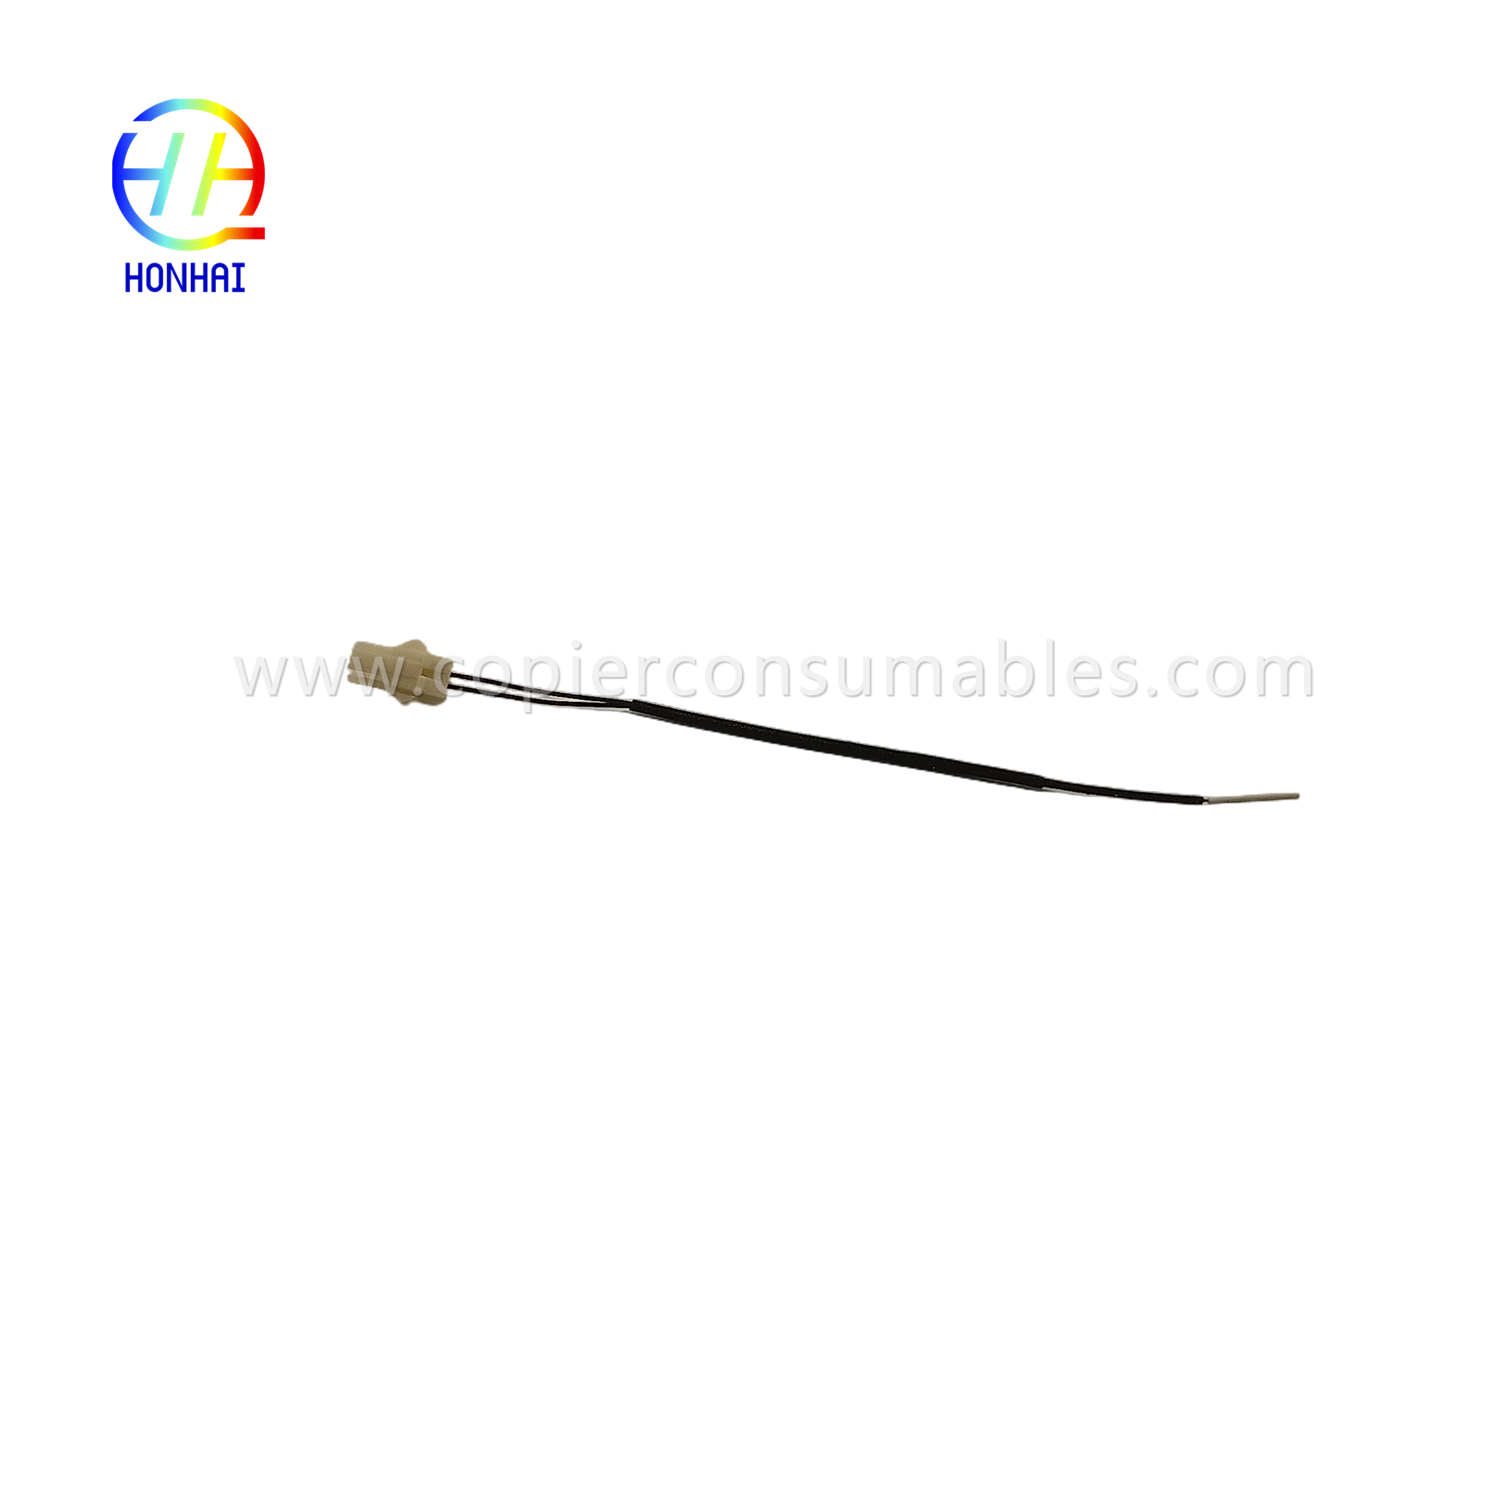 Fuser termistor for OCE 9400 TDS300 TDS750 PW300 350